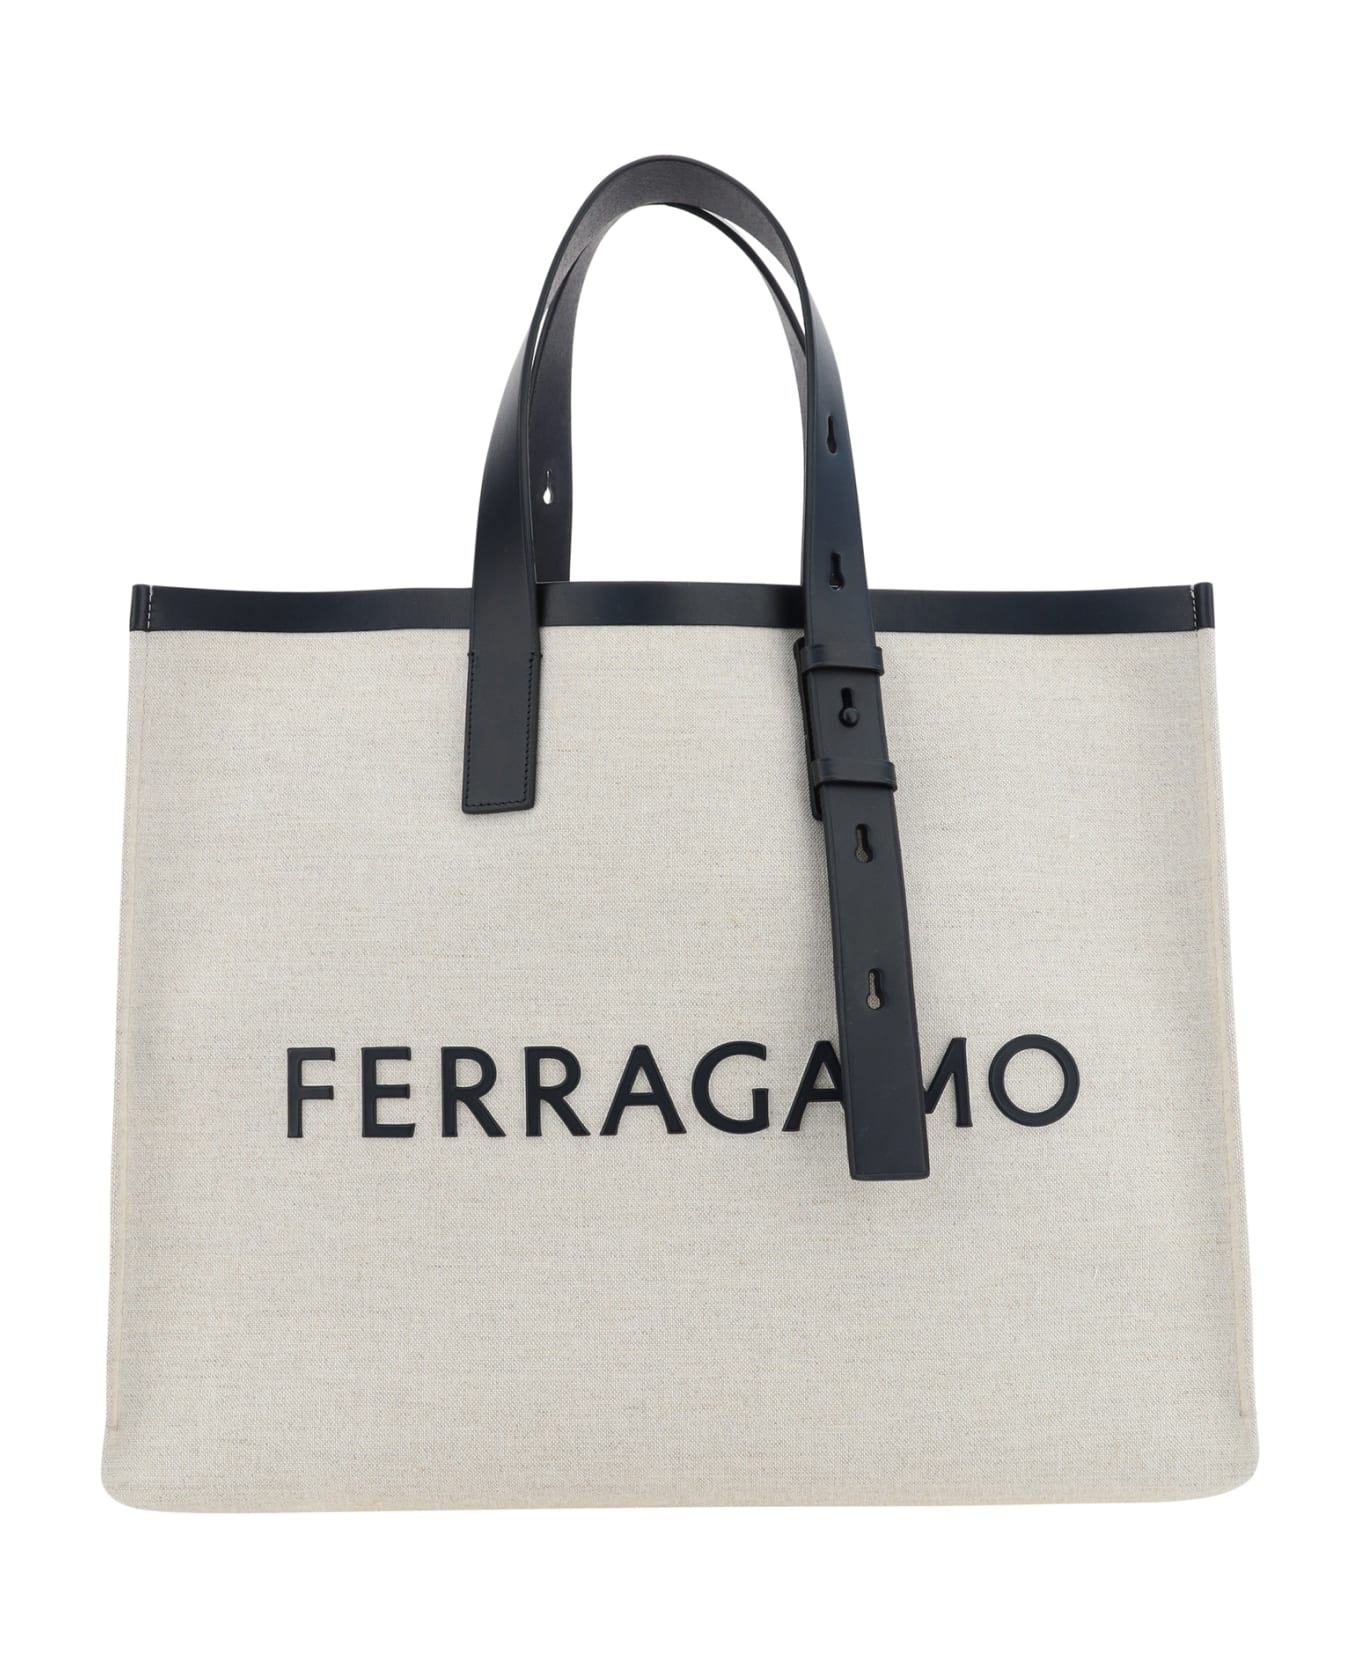 Ferragamo Shopping Bag - Nero